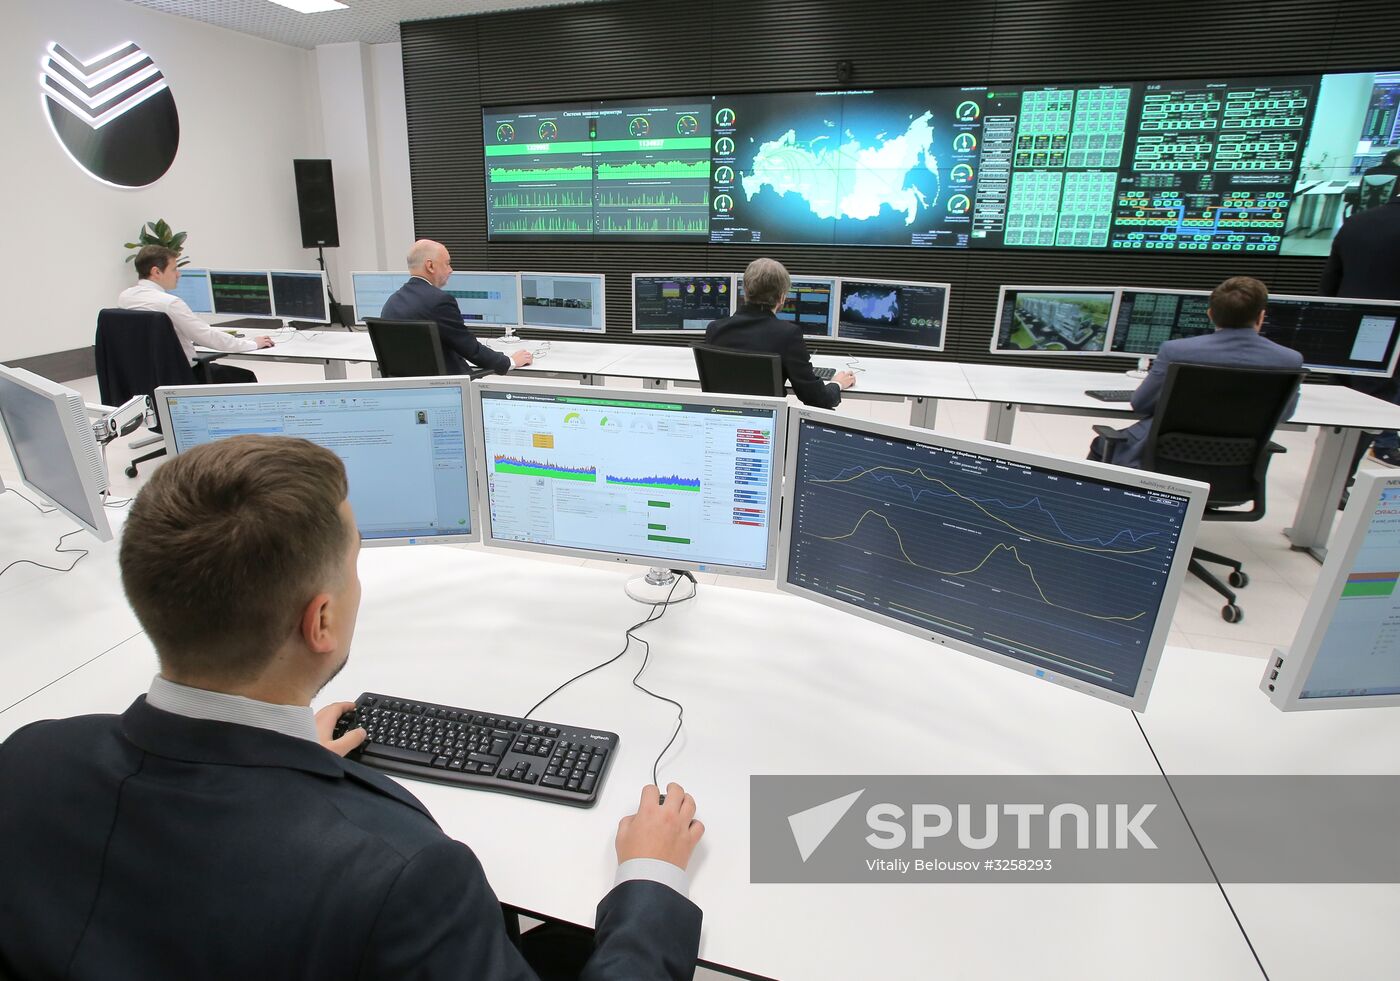 Skolkovo data center first stage commissioned